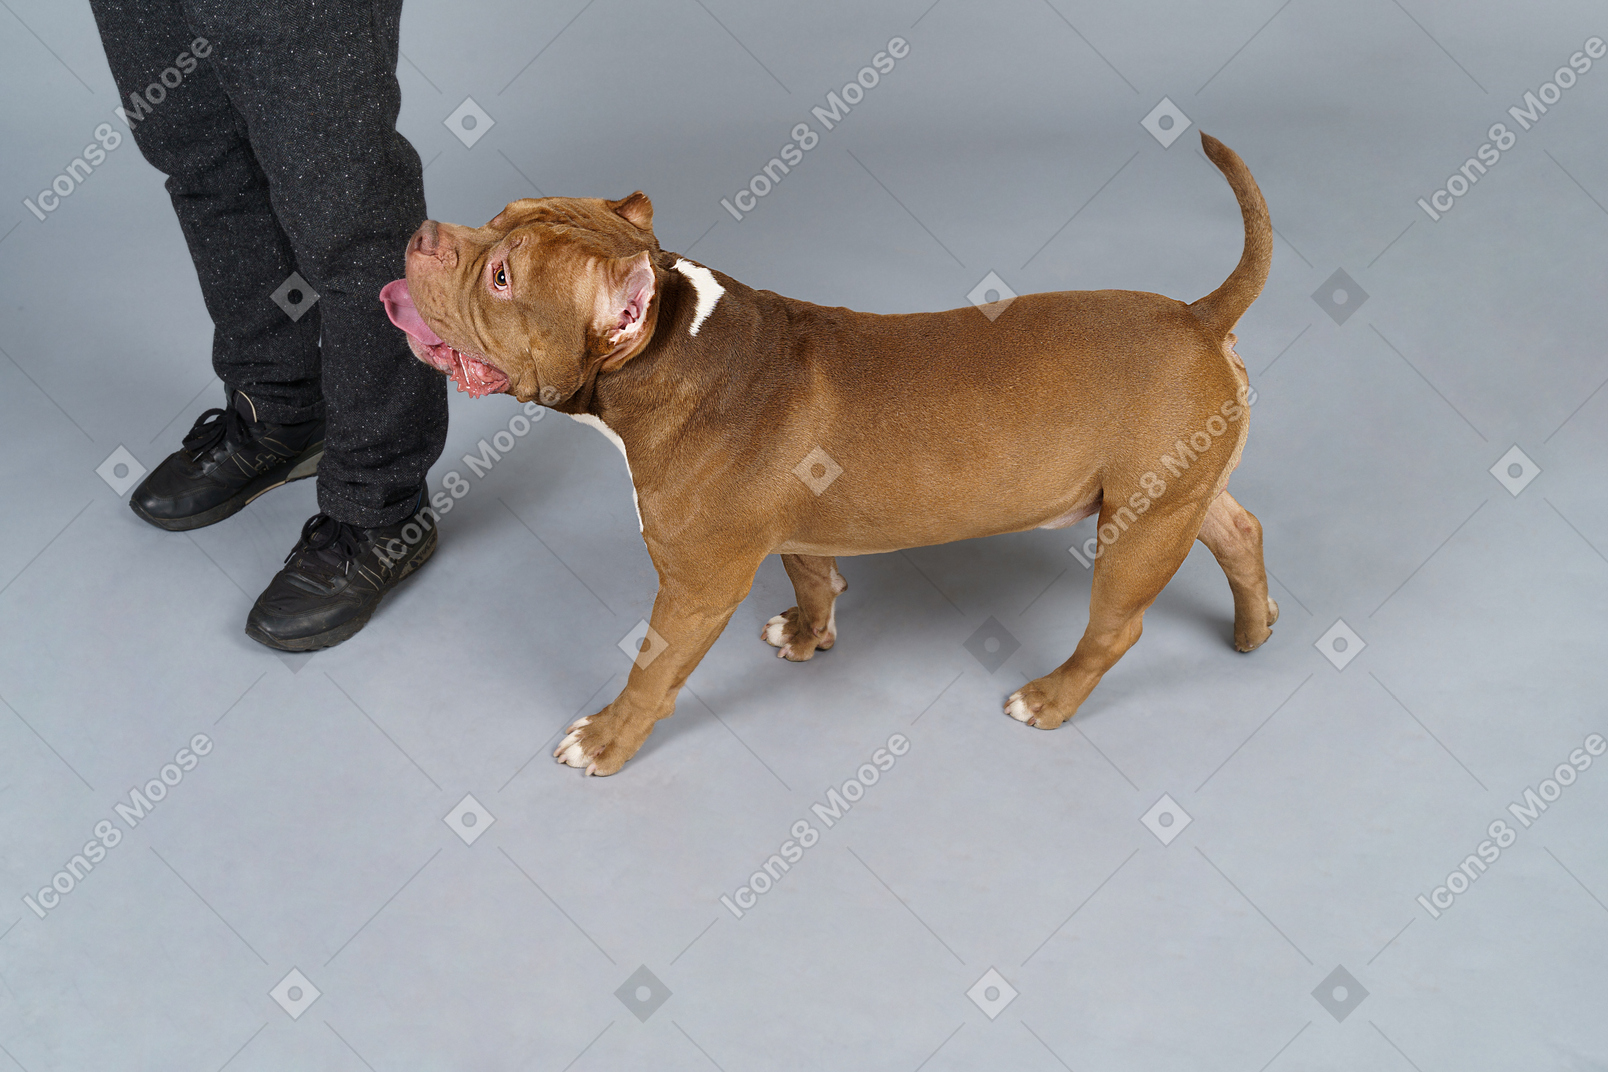 Full-length of a bulldog walking near his master